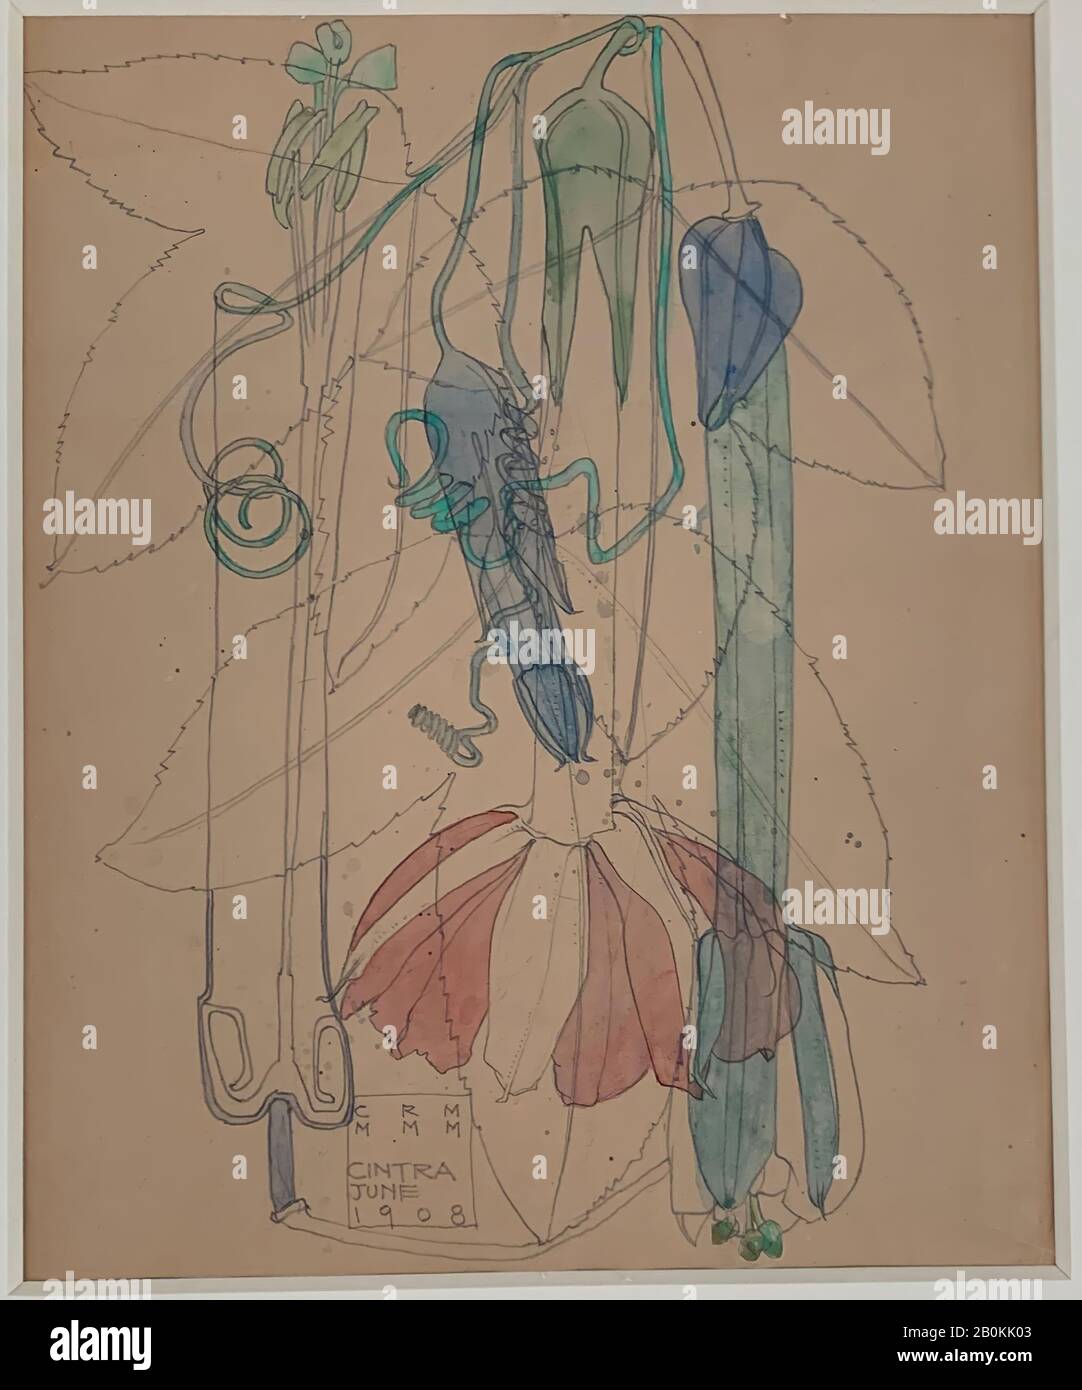 Charles Rennie Mackintosh, Tacsonia, Charles Rennie Mackintosh (British, Glasgow, Scotland 1868–1928 London), 1908, Graphite and watercolor on tan paper, 15 3/8 × 13 3/8 in. (39.1 × 34 cm), Drawings Stock Photo